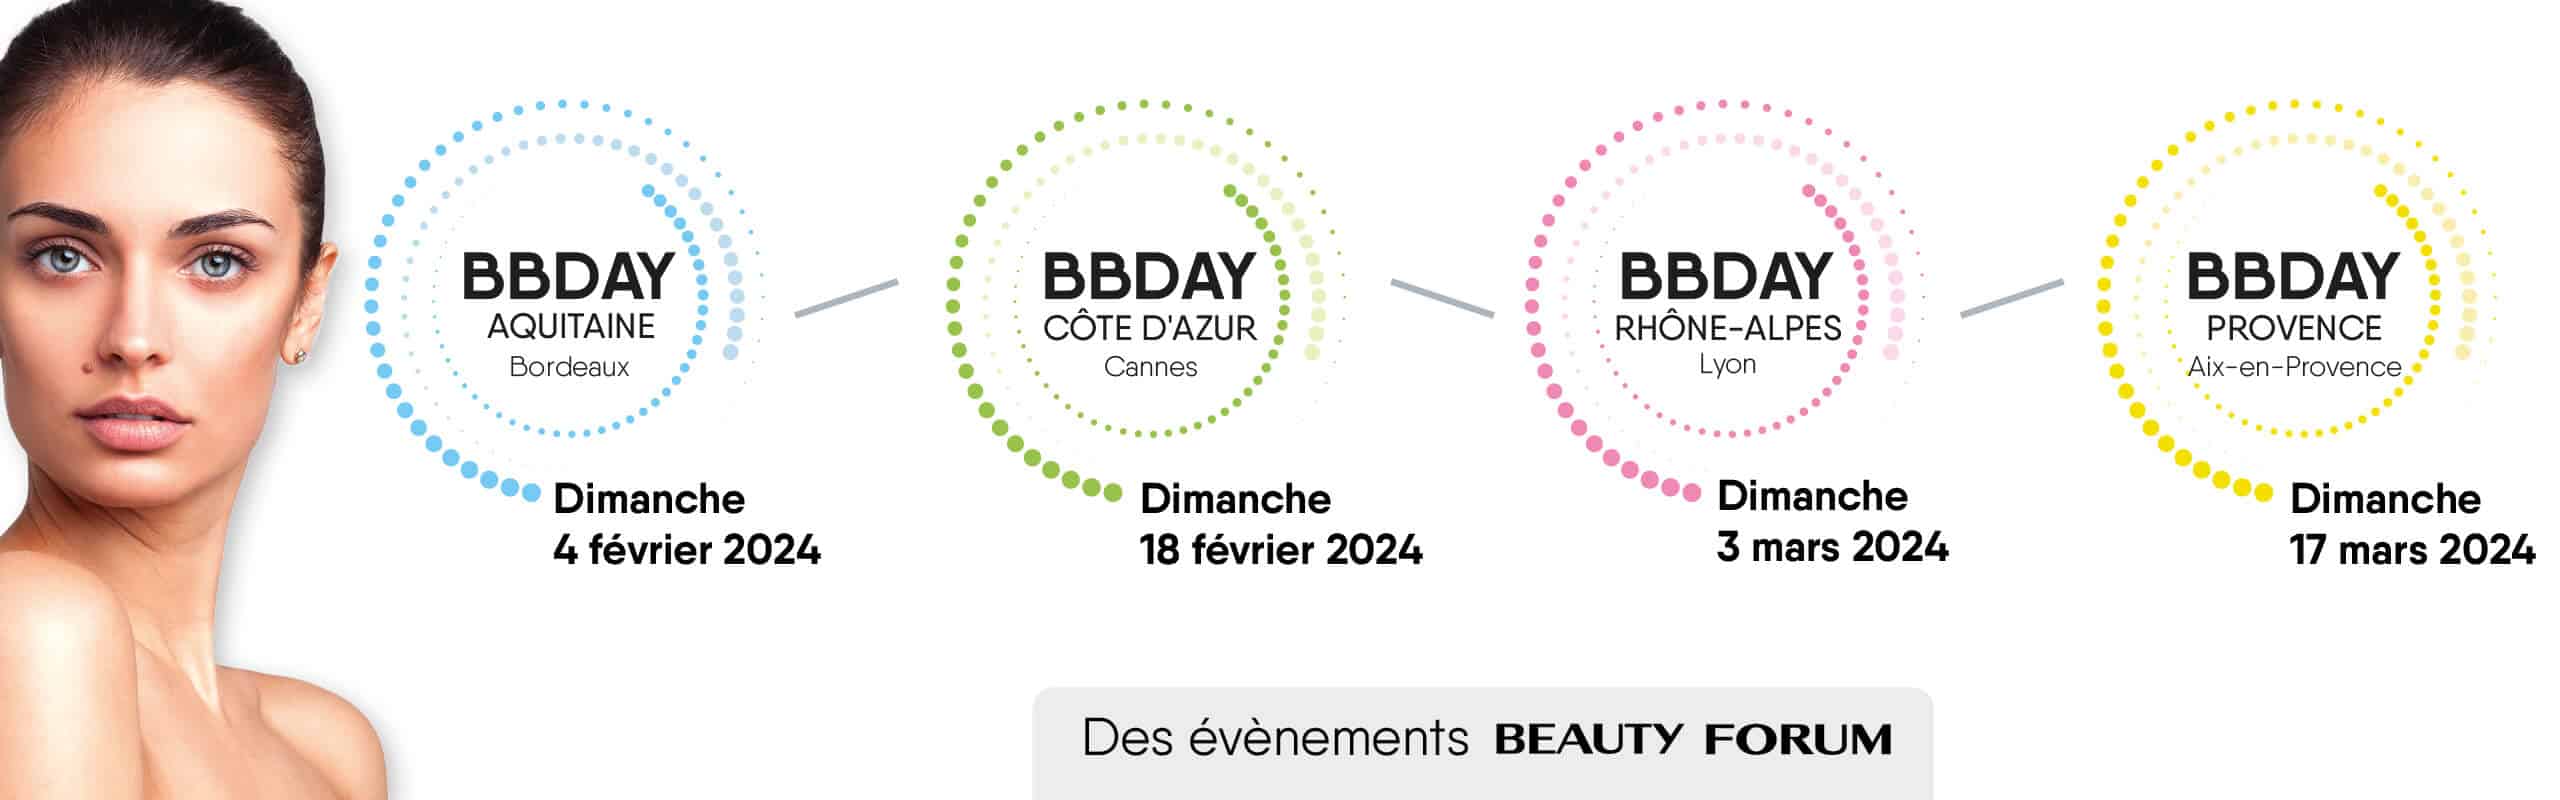 BBDAYS_2024-Beauty Forum